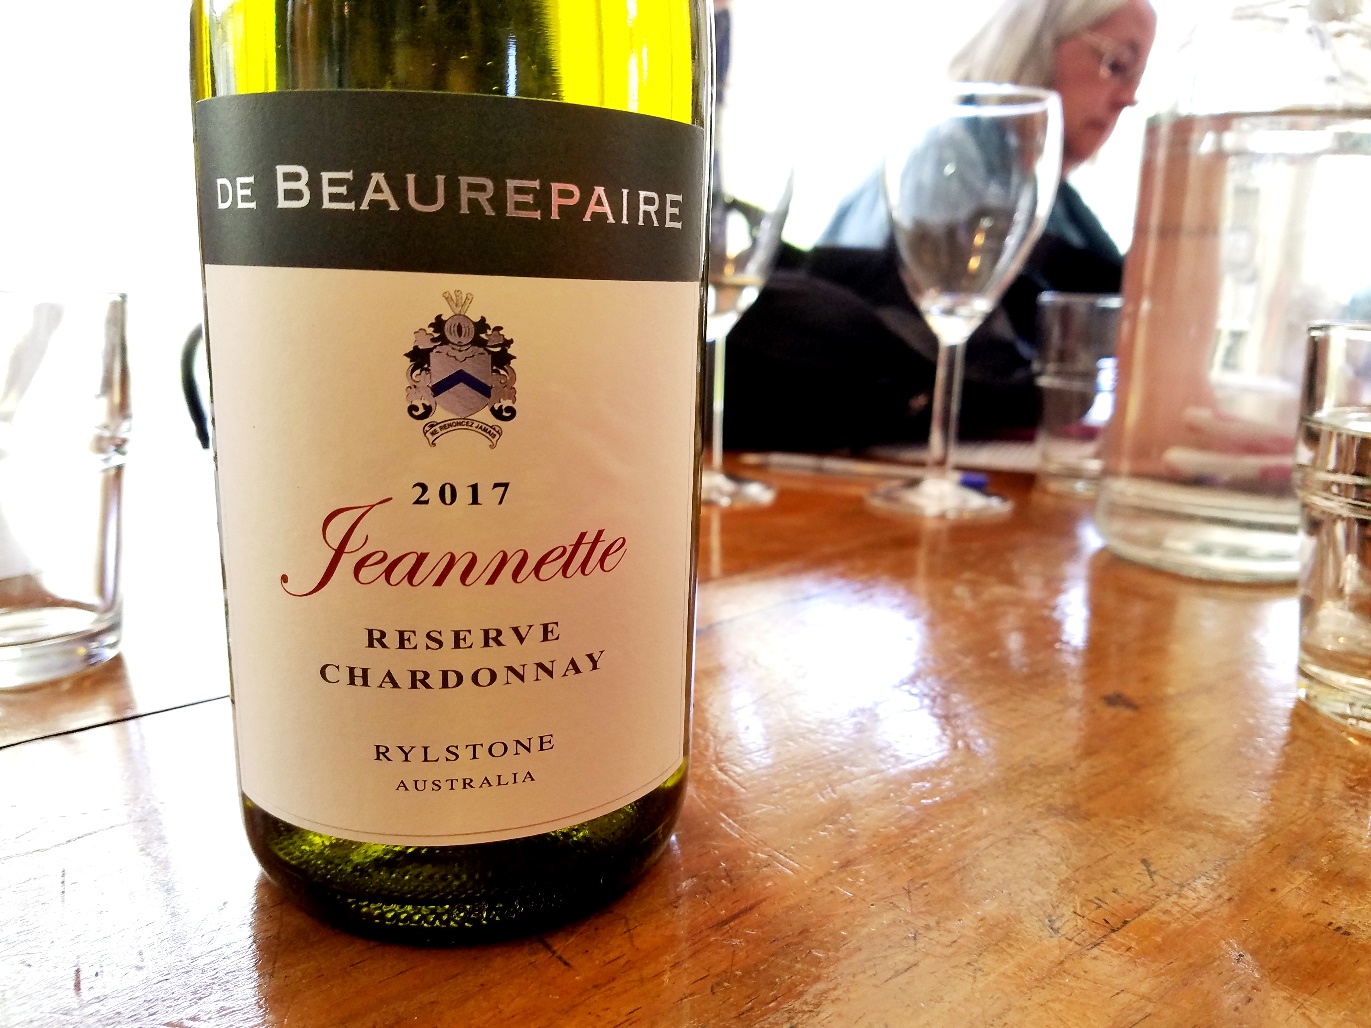 De Beaurepaire, Jeannette Reserve Chardonnay 2017, Rylstone, New South Wales, Australia, Wine Casual